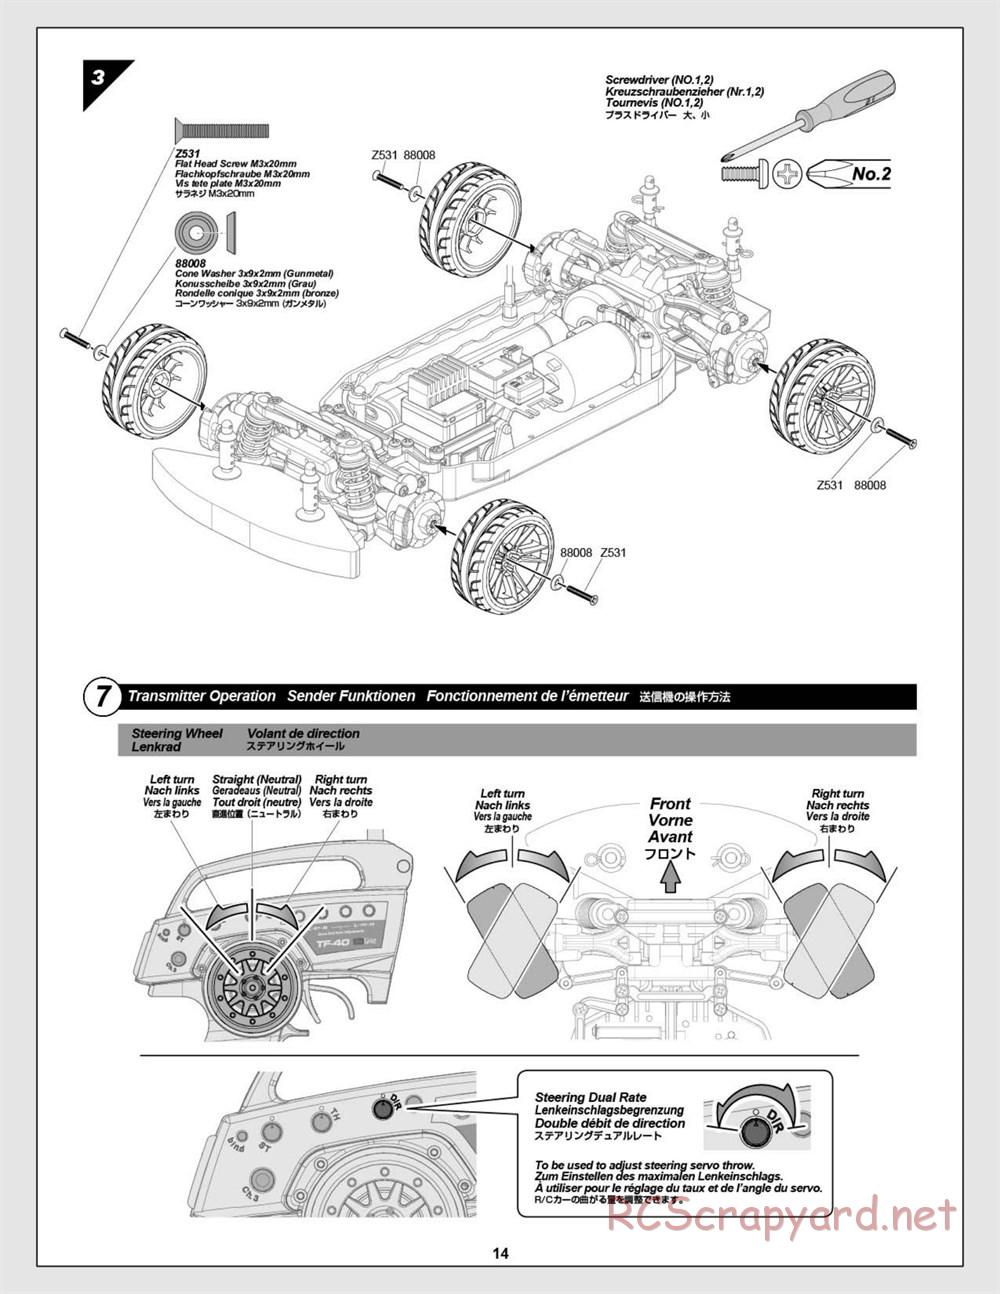 HPI - E10 - Manual - Page 14